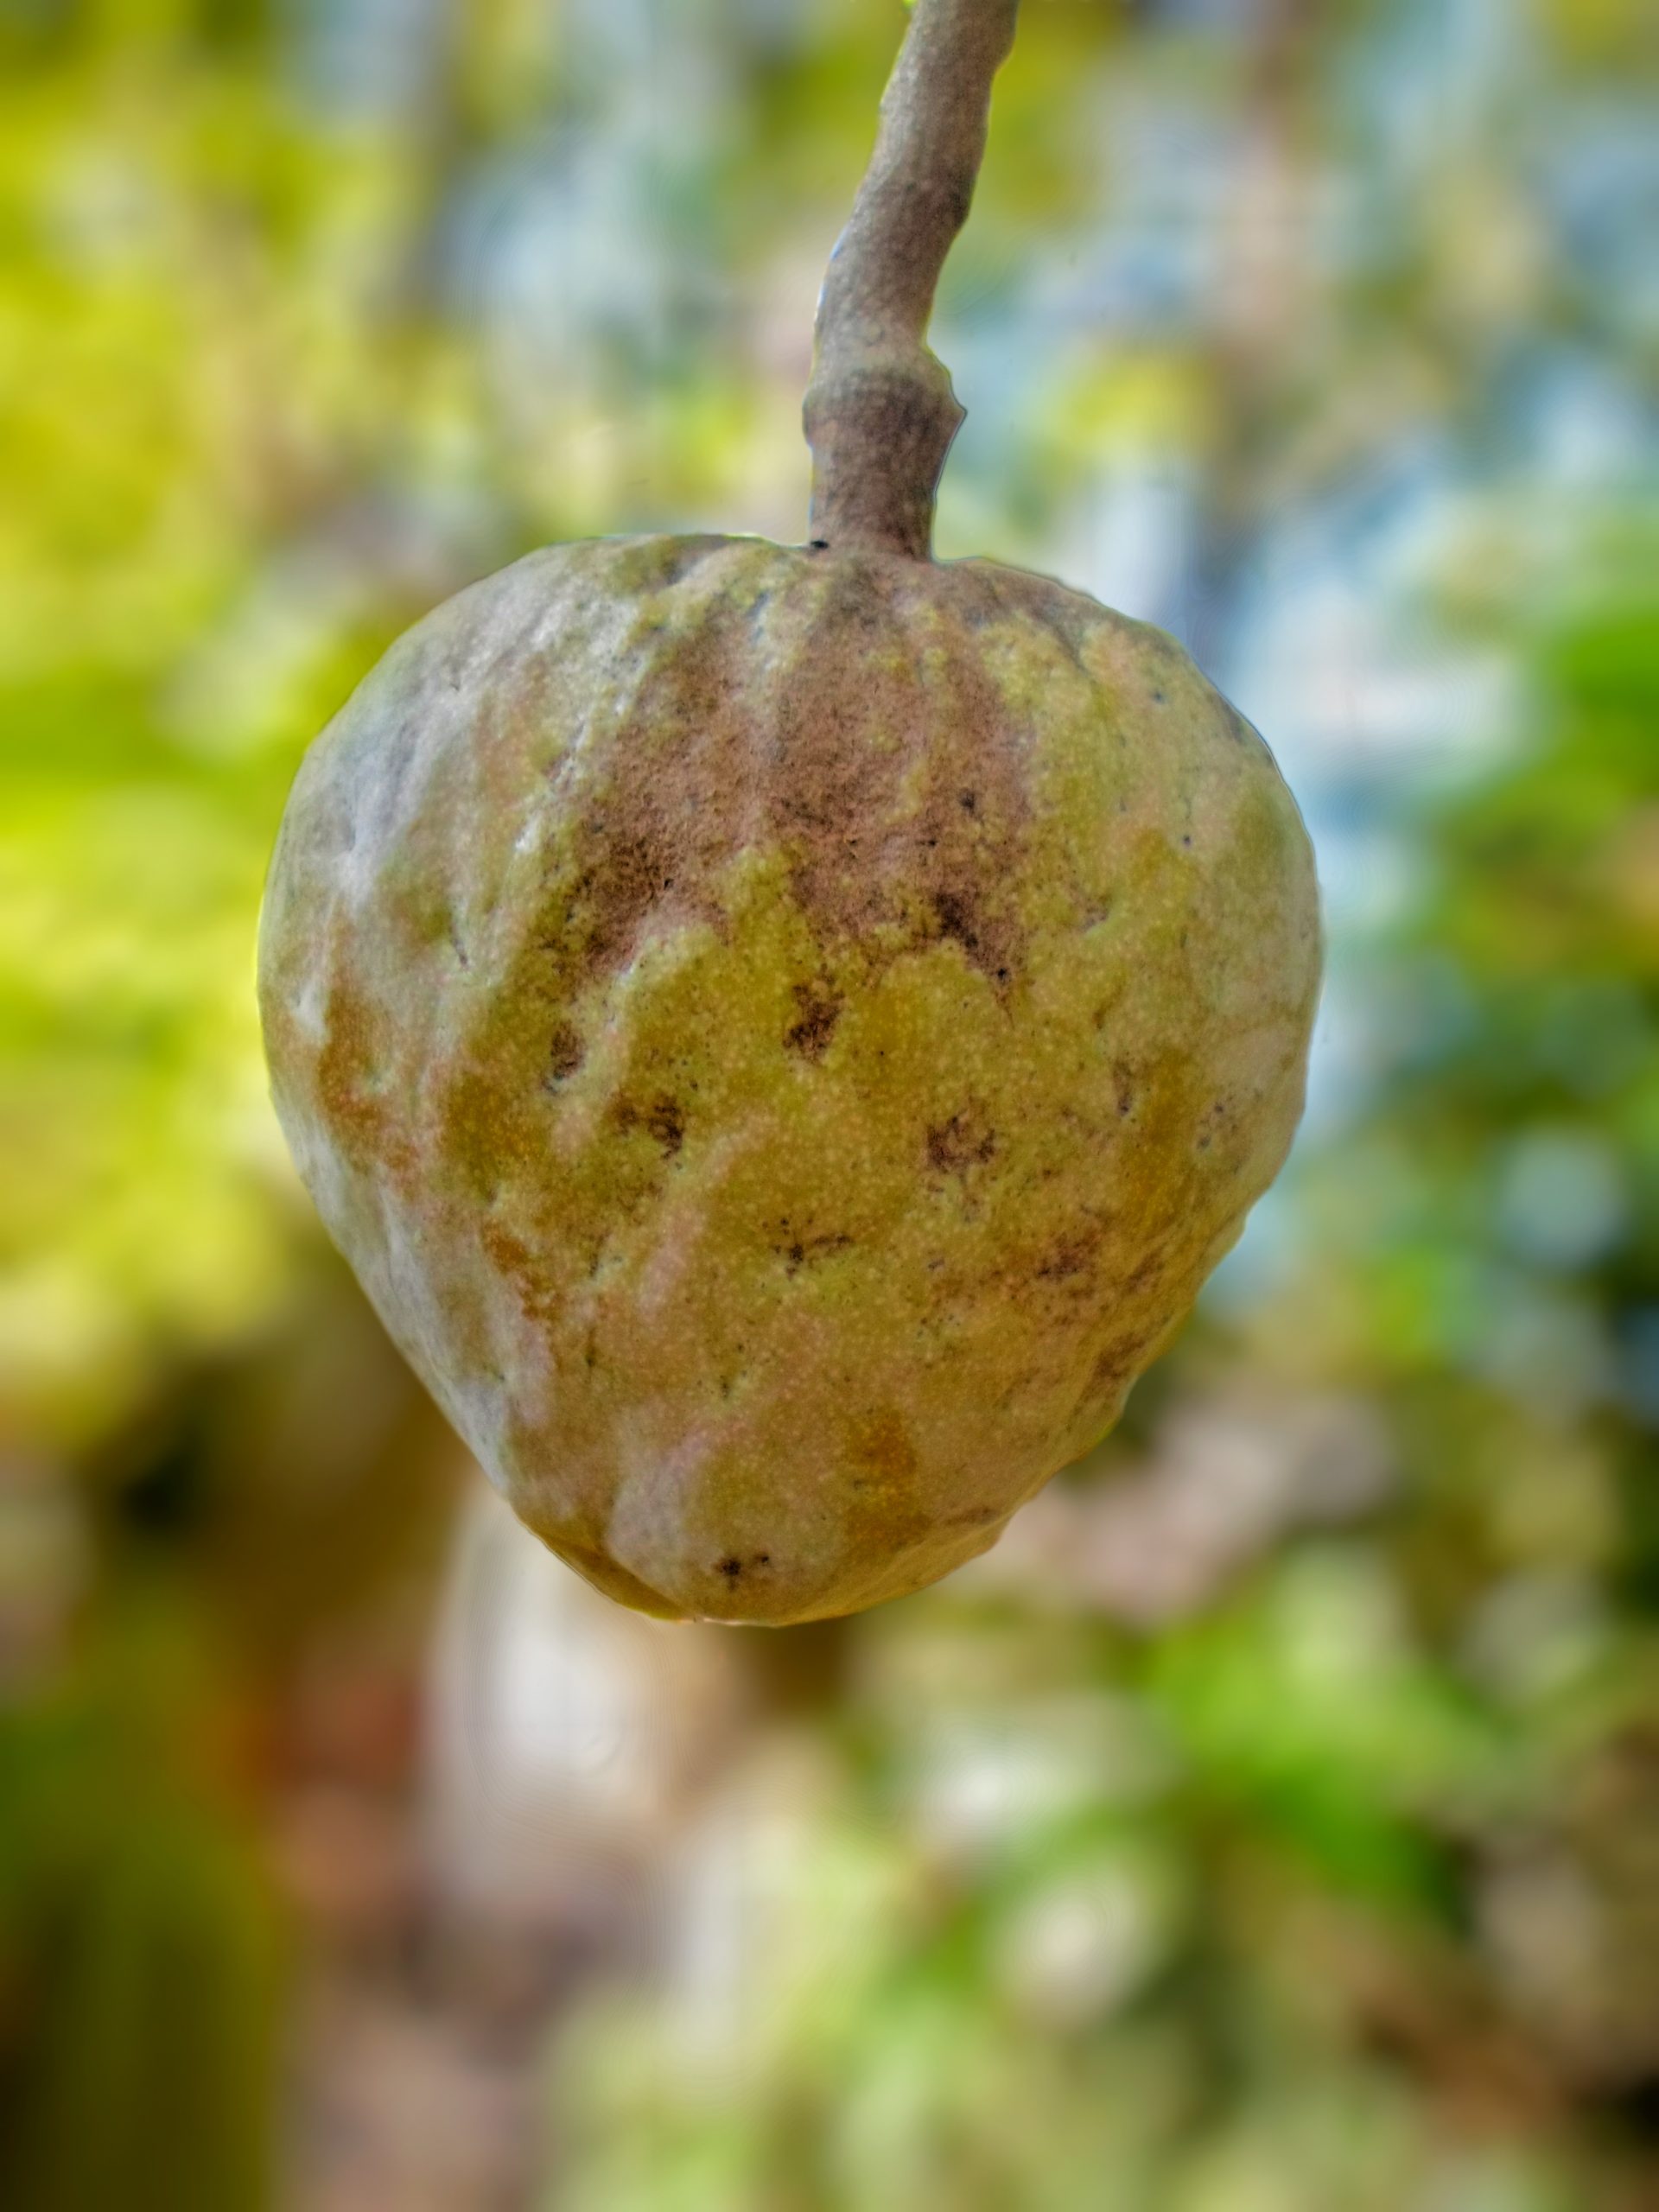 A custard apple hanging